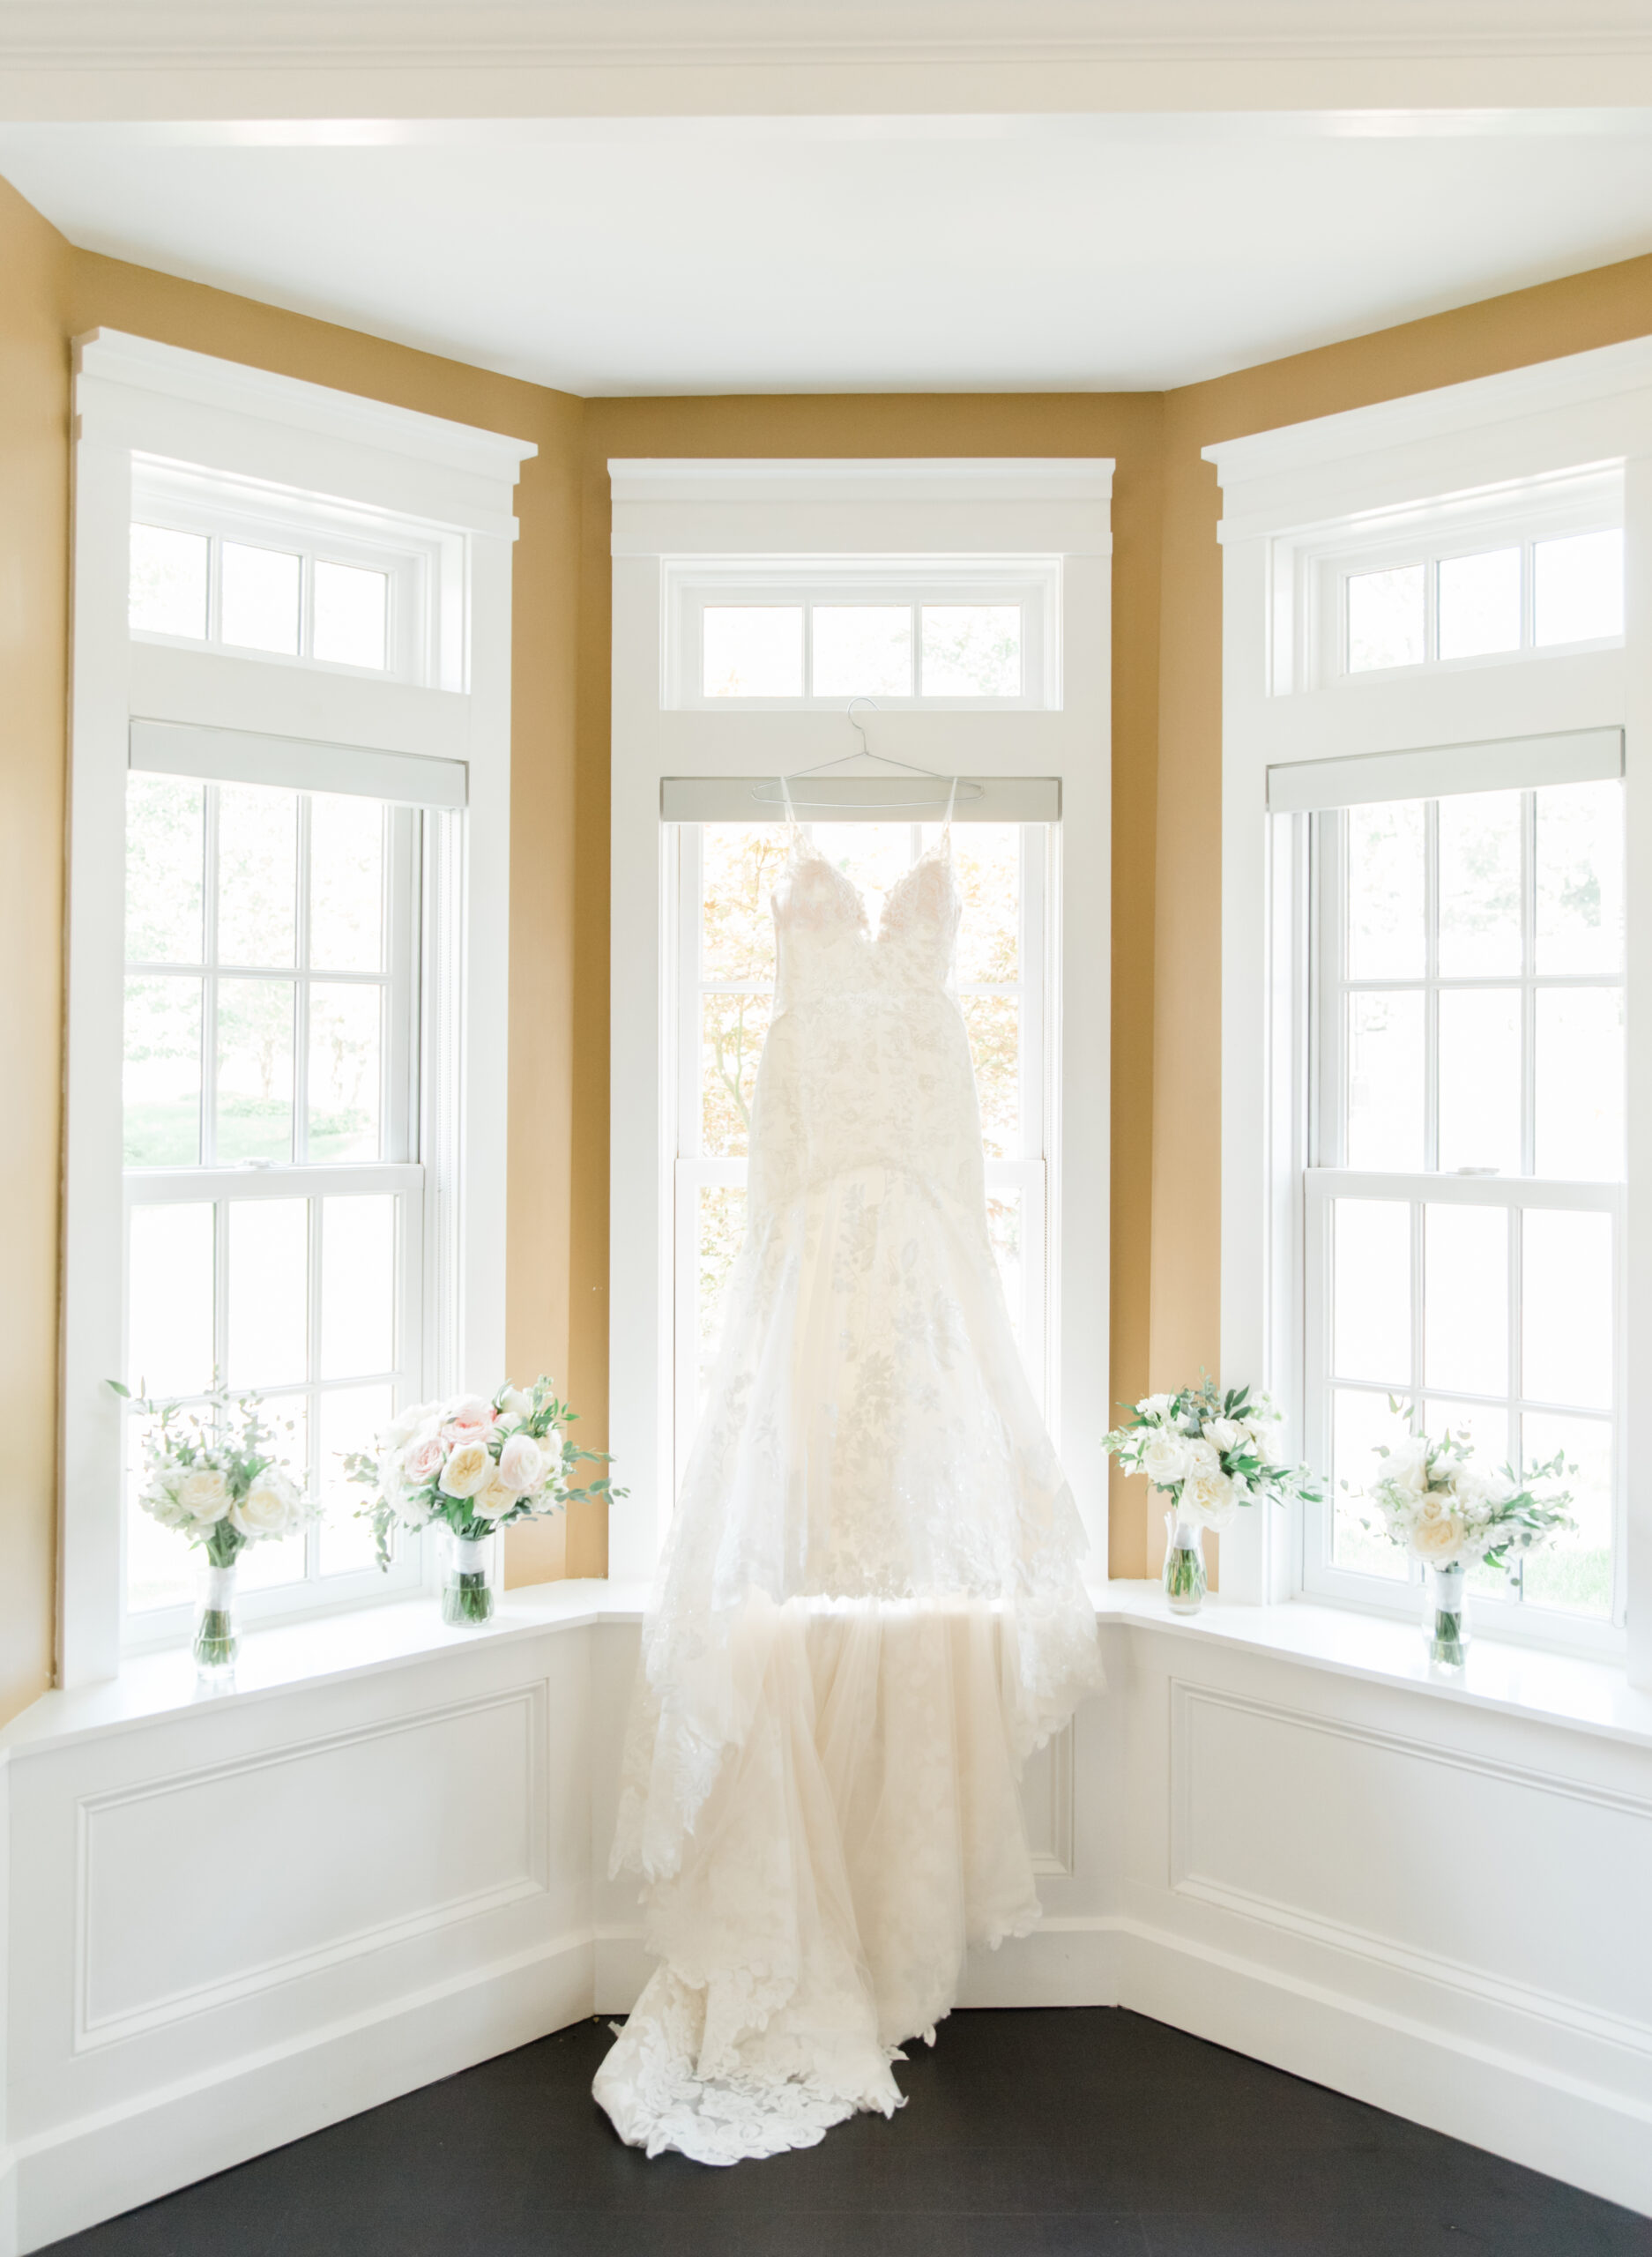 A pretty wedding dress hanging in a window.